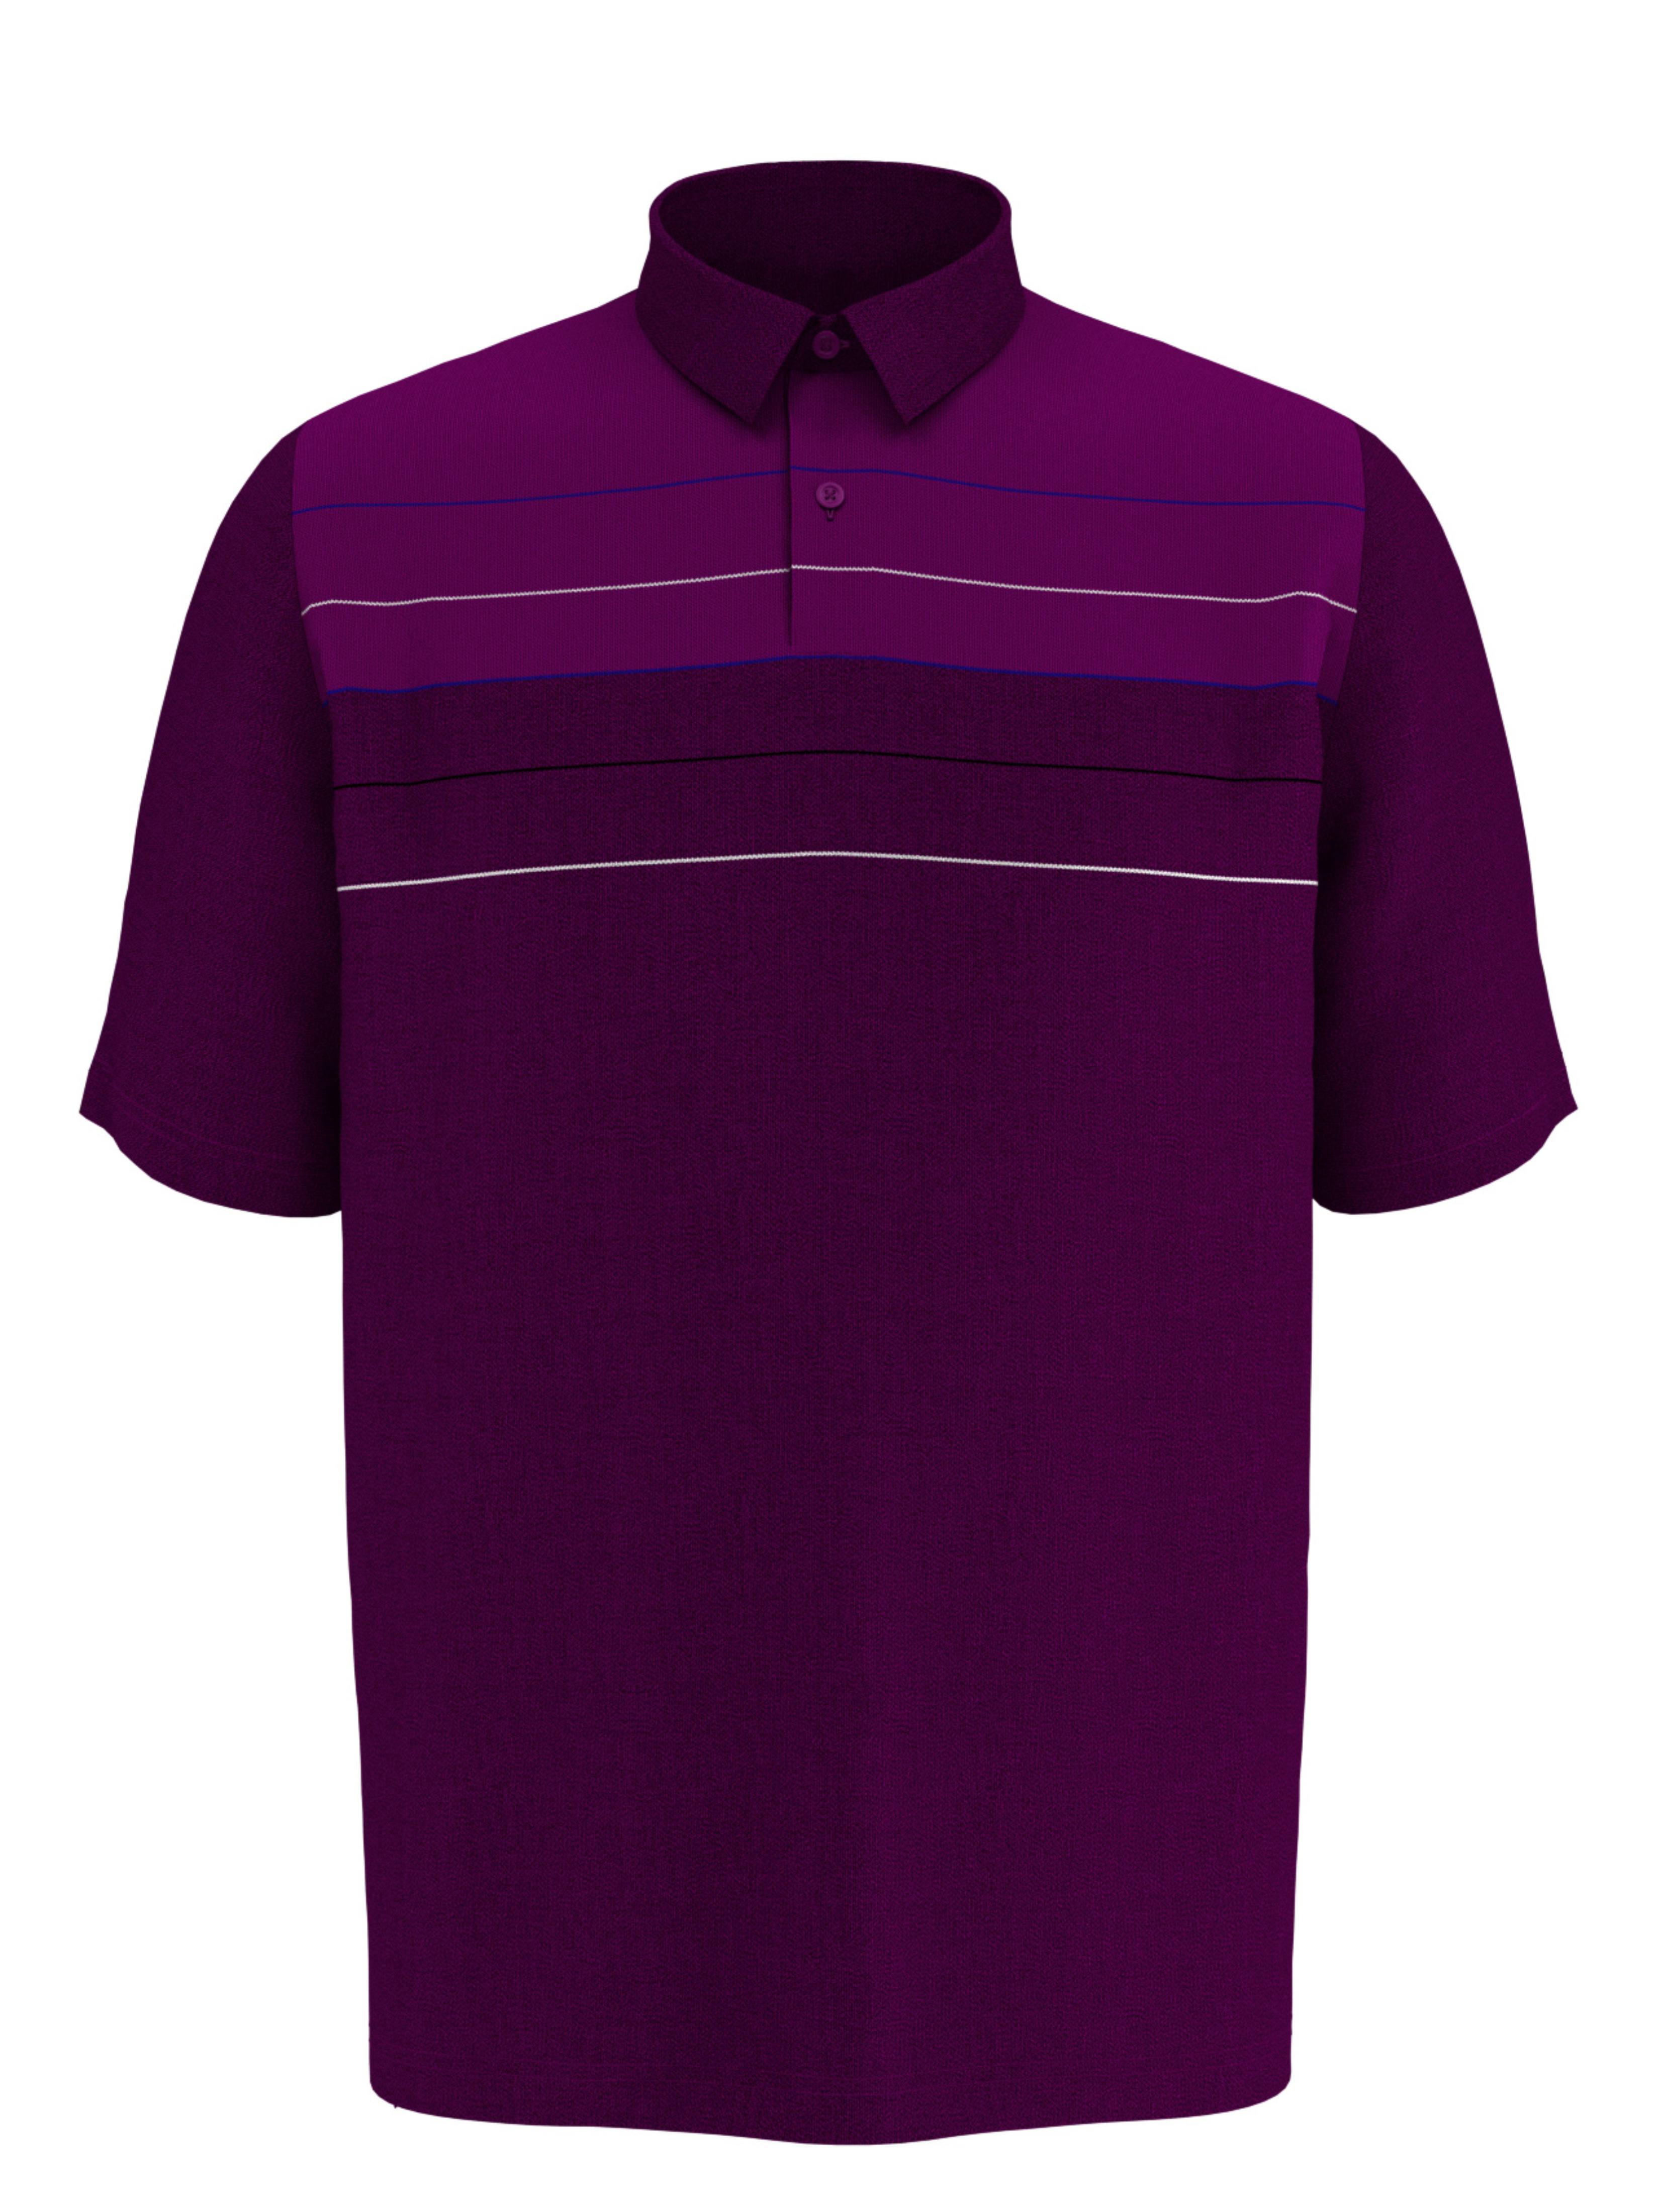 Callaway Apparel Mens Big & Tall Jaspe Color Block Golf Polo Shirt, Size 4X, Dark Purple, Polyester/Recycled Polyester/Elastane | Golf Apparel Shop